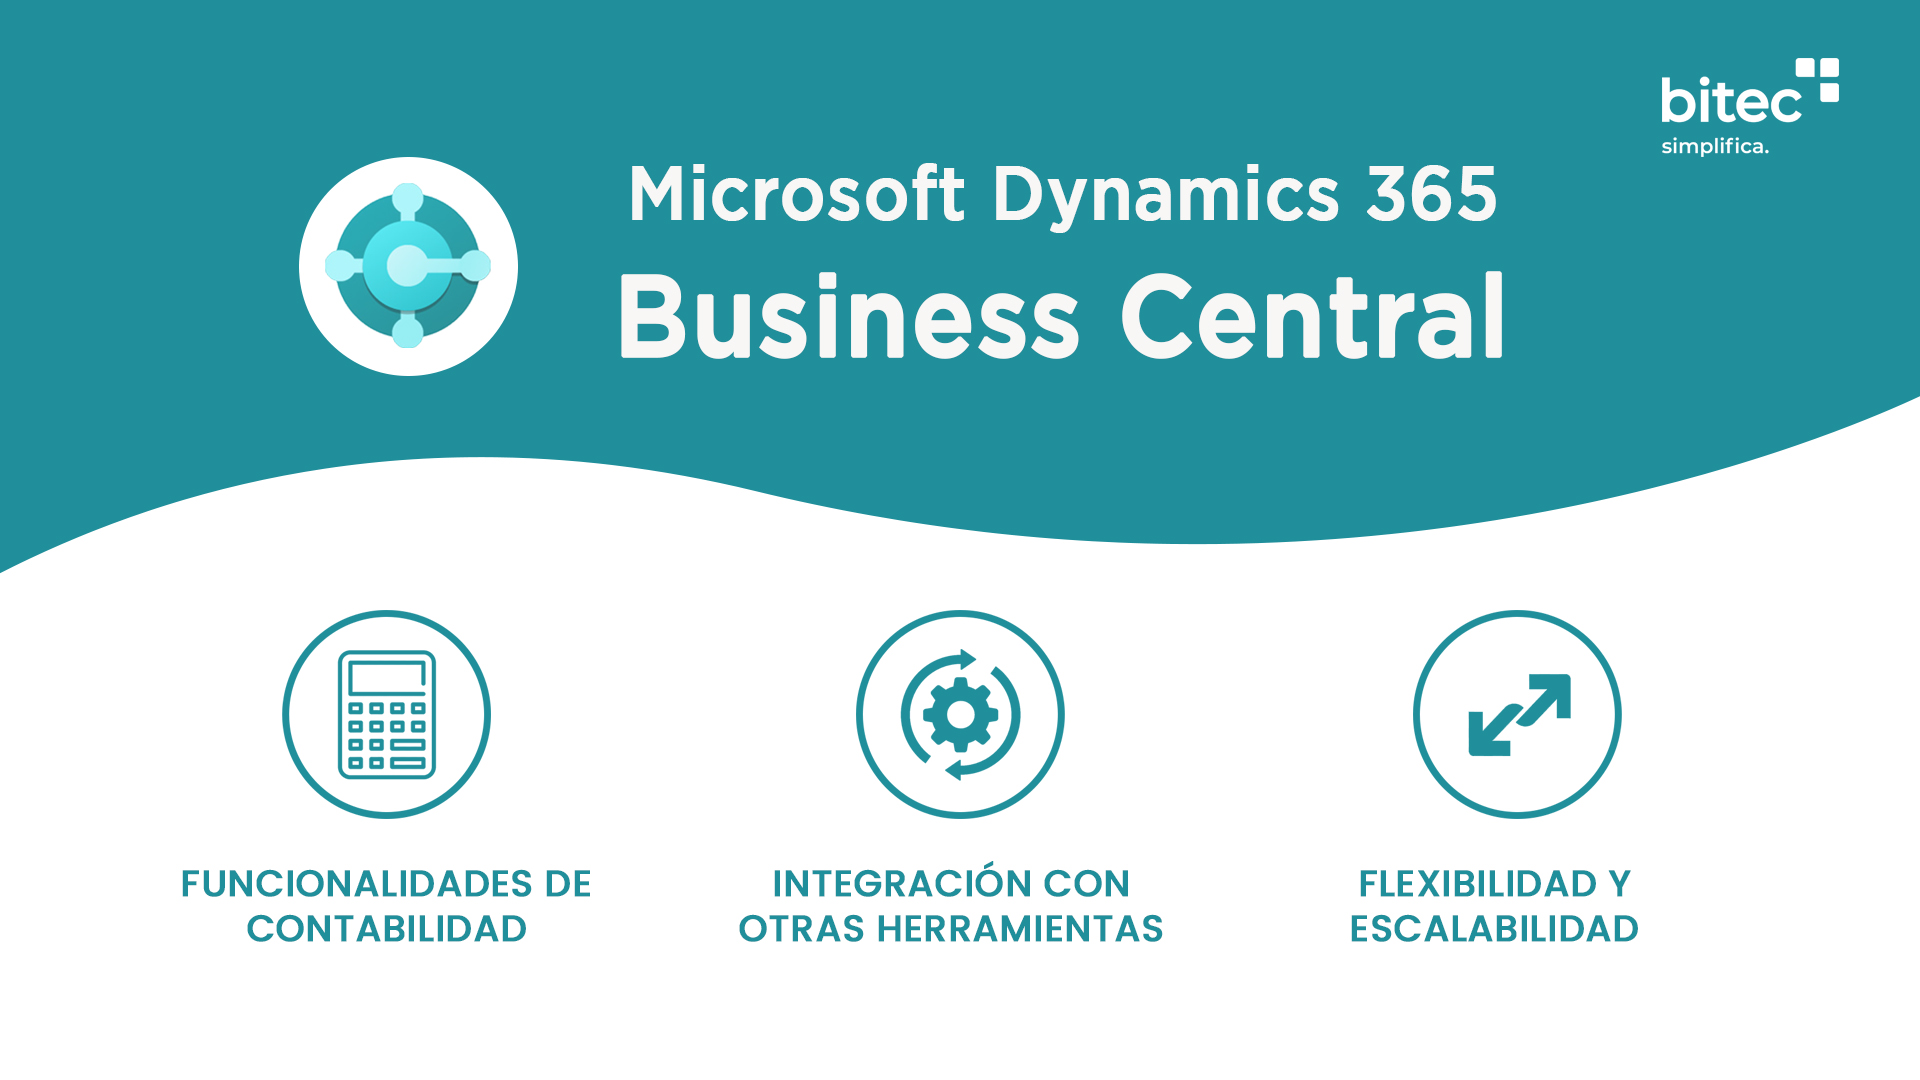 ¿Por qué pasarse a Dynamics 365 Business Central?